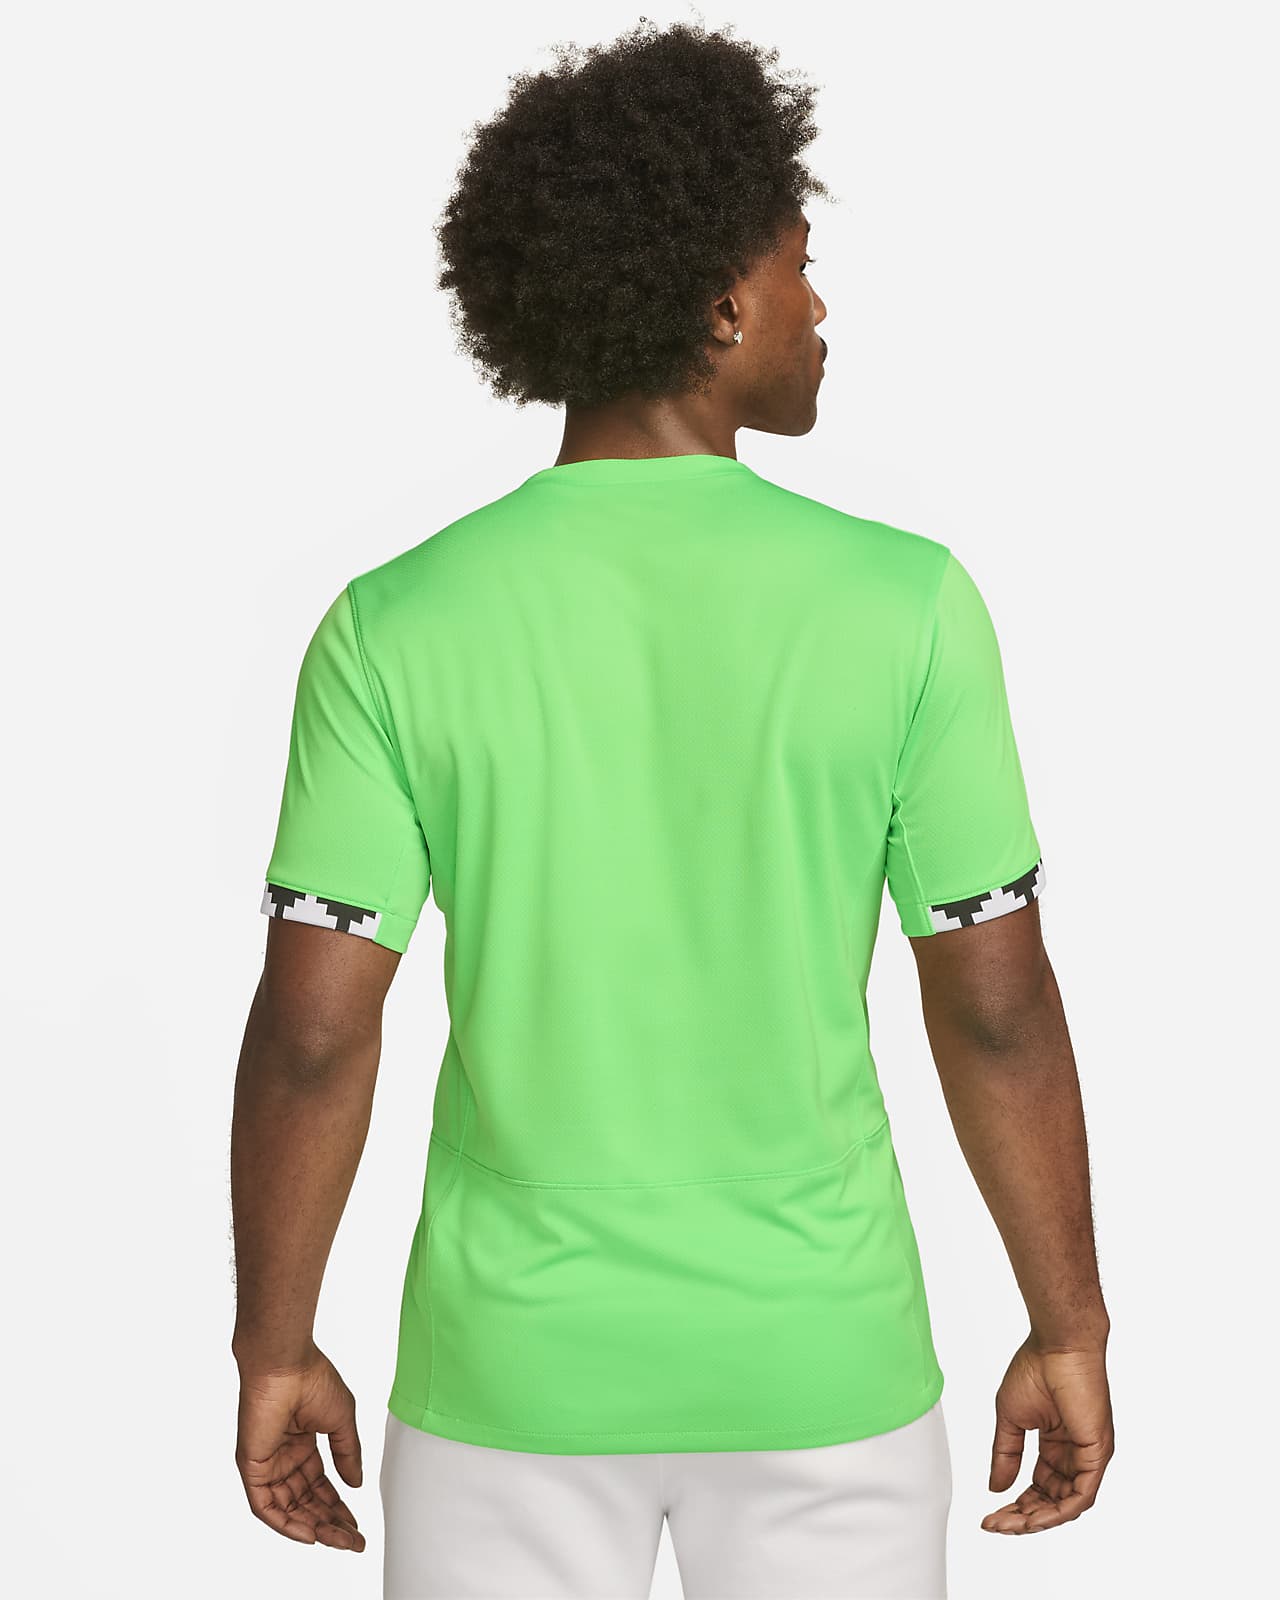 nigeria fc shirt